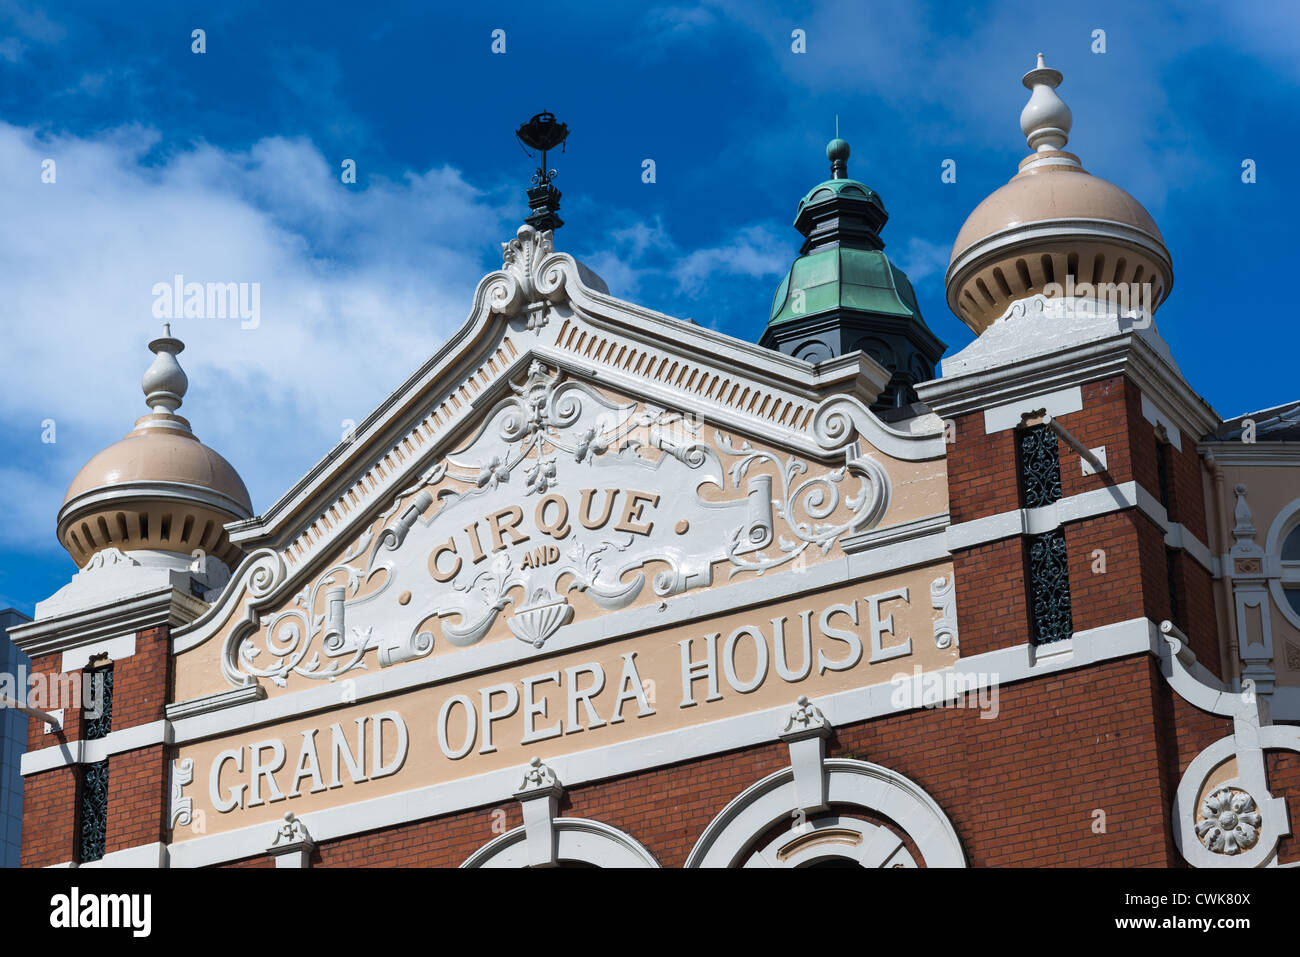 Belfast Grand Opera House, Northern Ireland, UK. Stock Photo